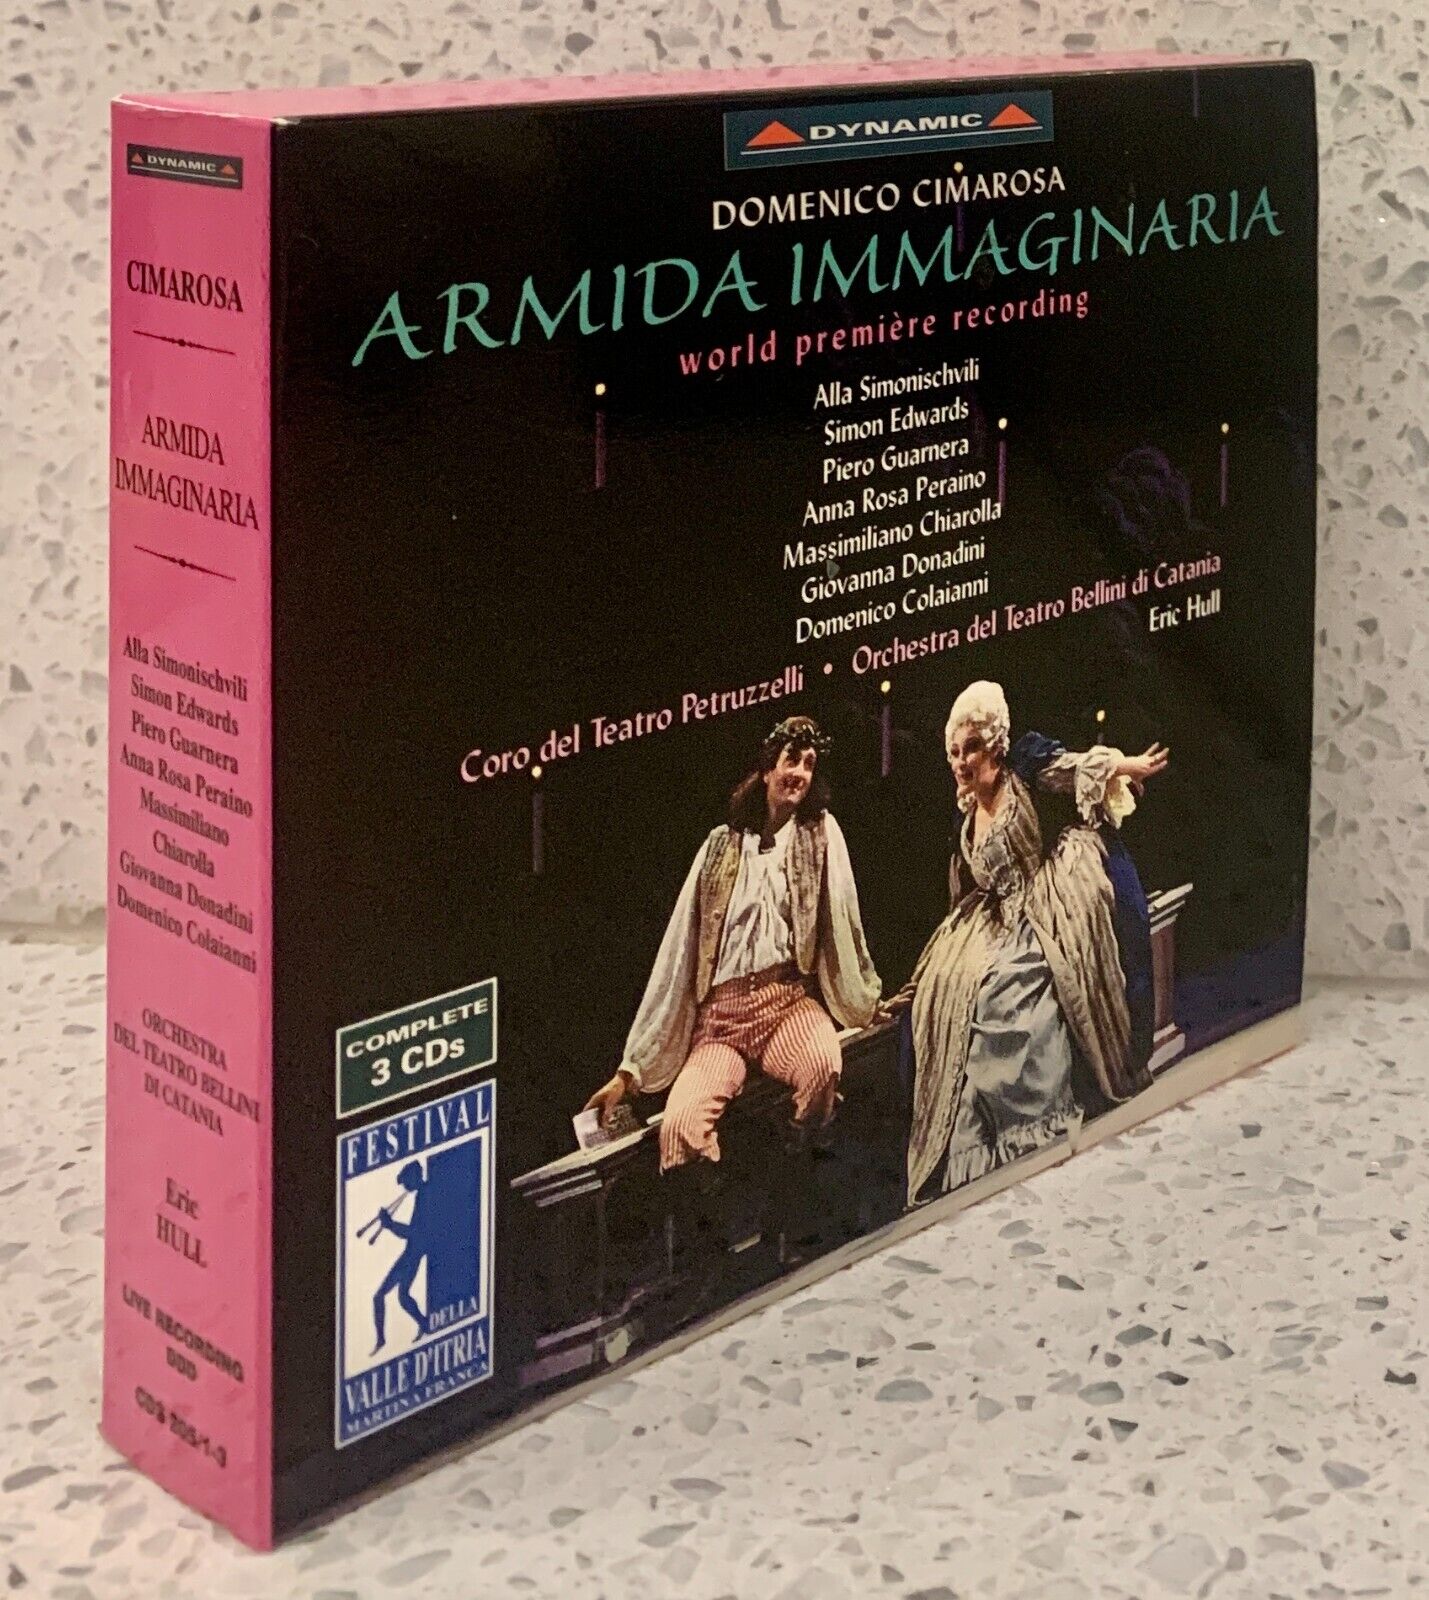 CIMAROSA Armida Immaginaria [1997] (3 discs, Dynamic) HULL Opera Classical